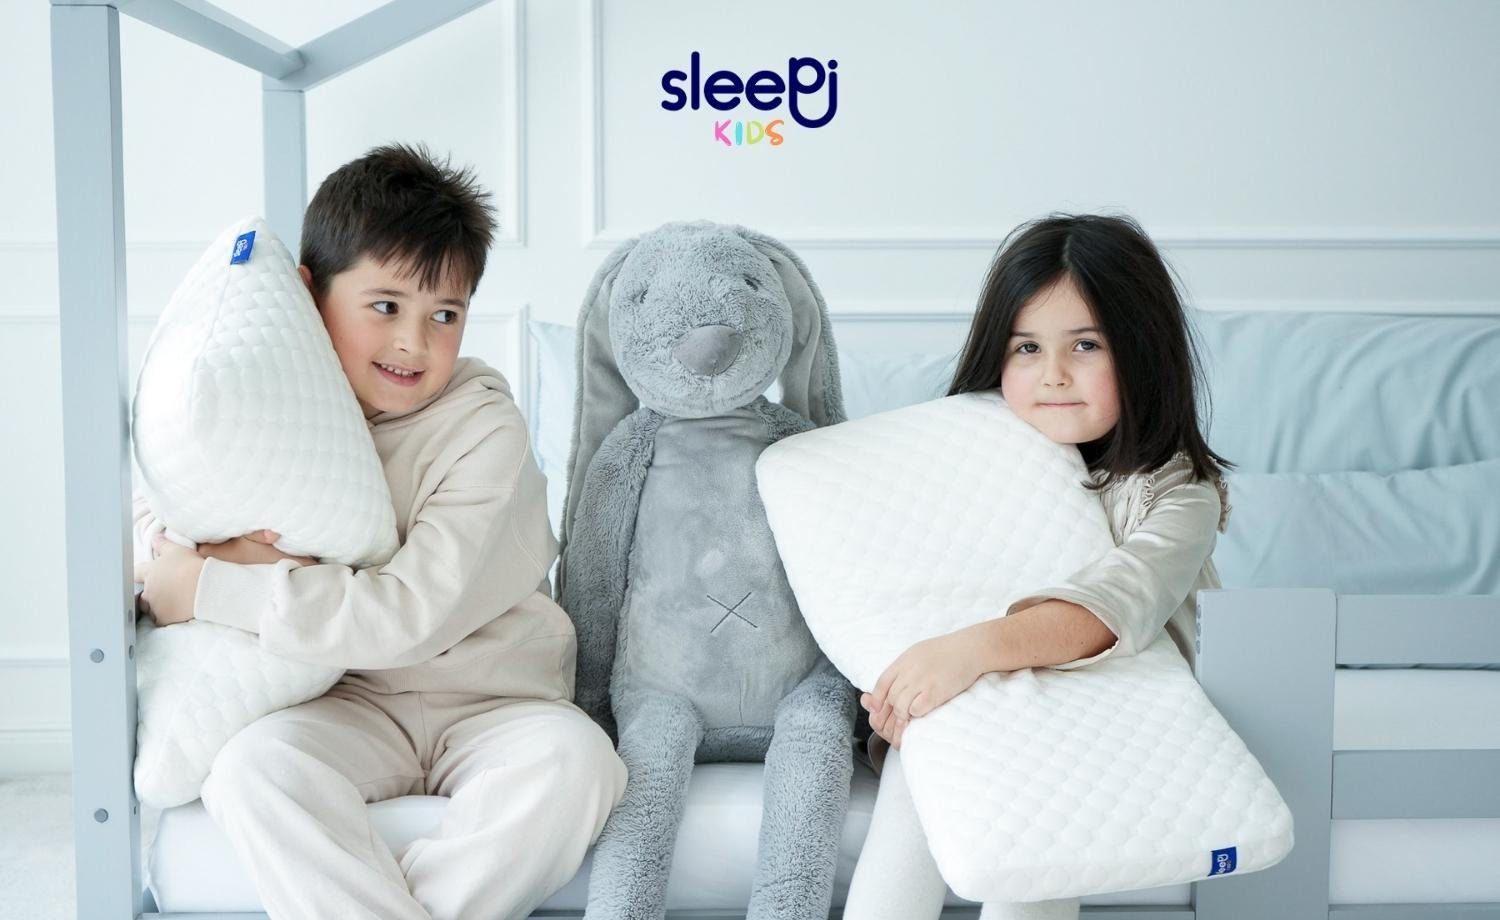 Kids SLEEPI, Ersatz Kissenbezug Cloud für Sleepi 60x30cm Kids Kissenbezug, Cloud Kissenbezug